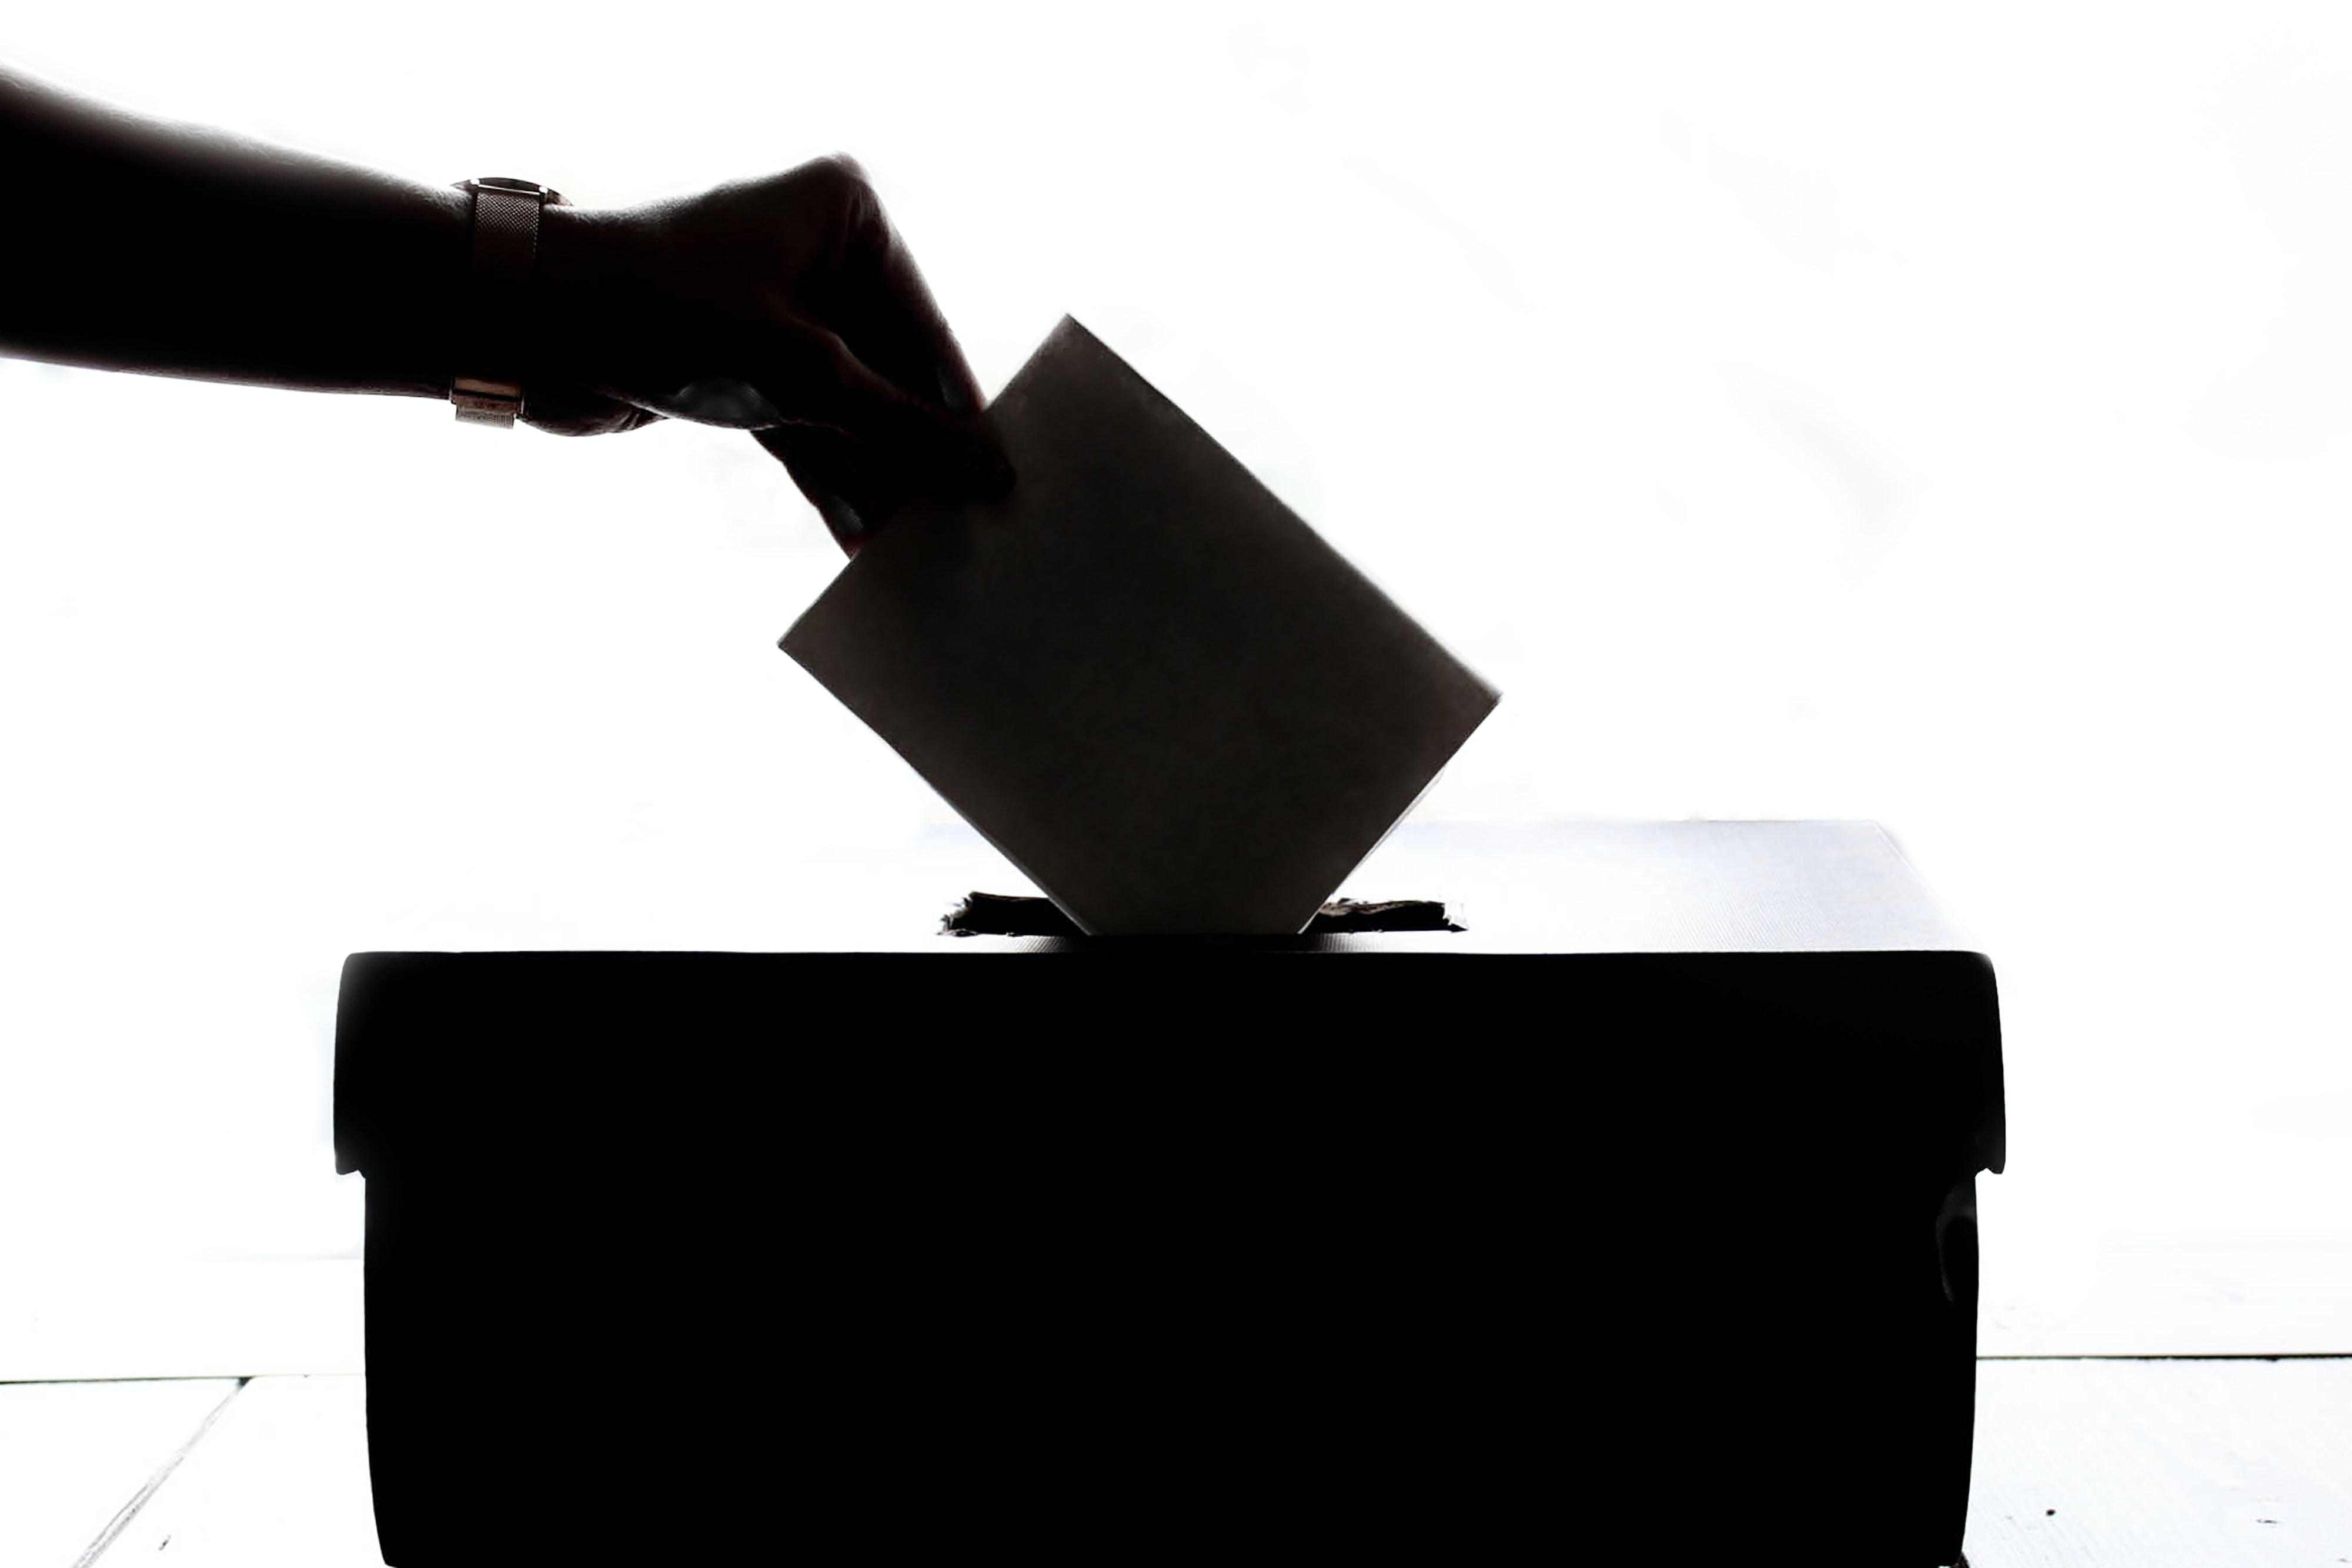 A person putting a ballot paper into a ballot box